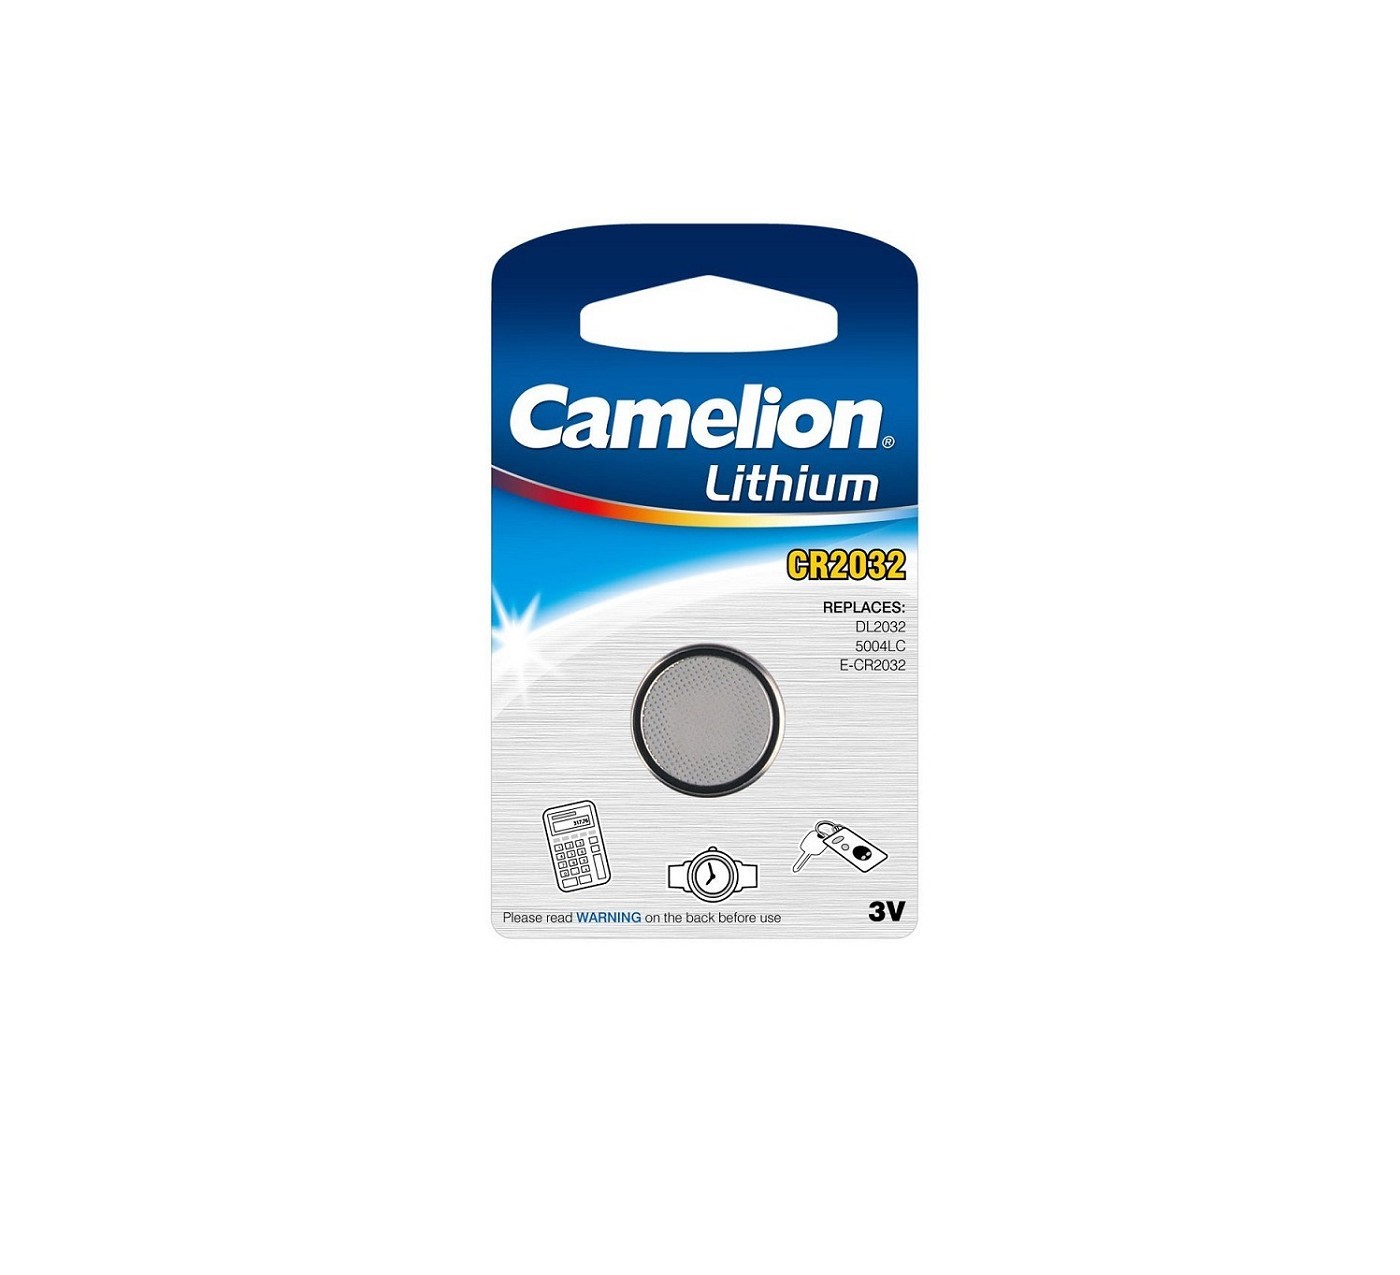 Camelion Lithium CR2032 Knopfzelle 3V Batterie